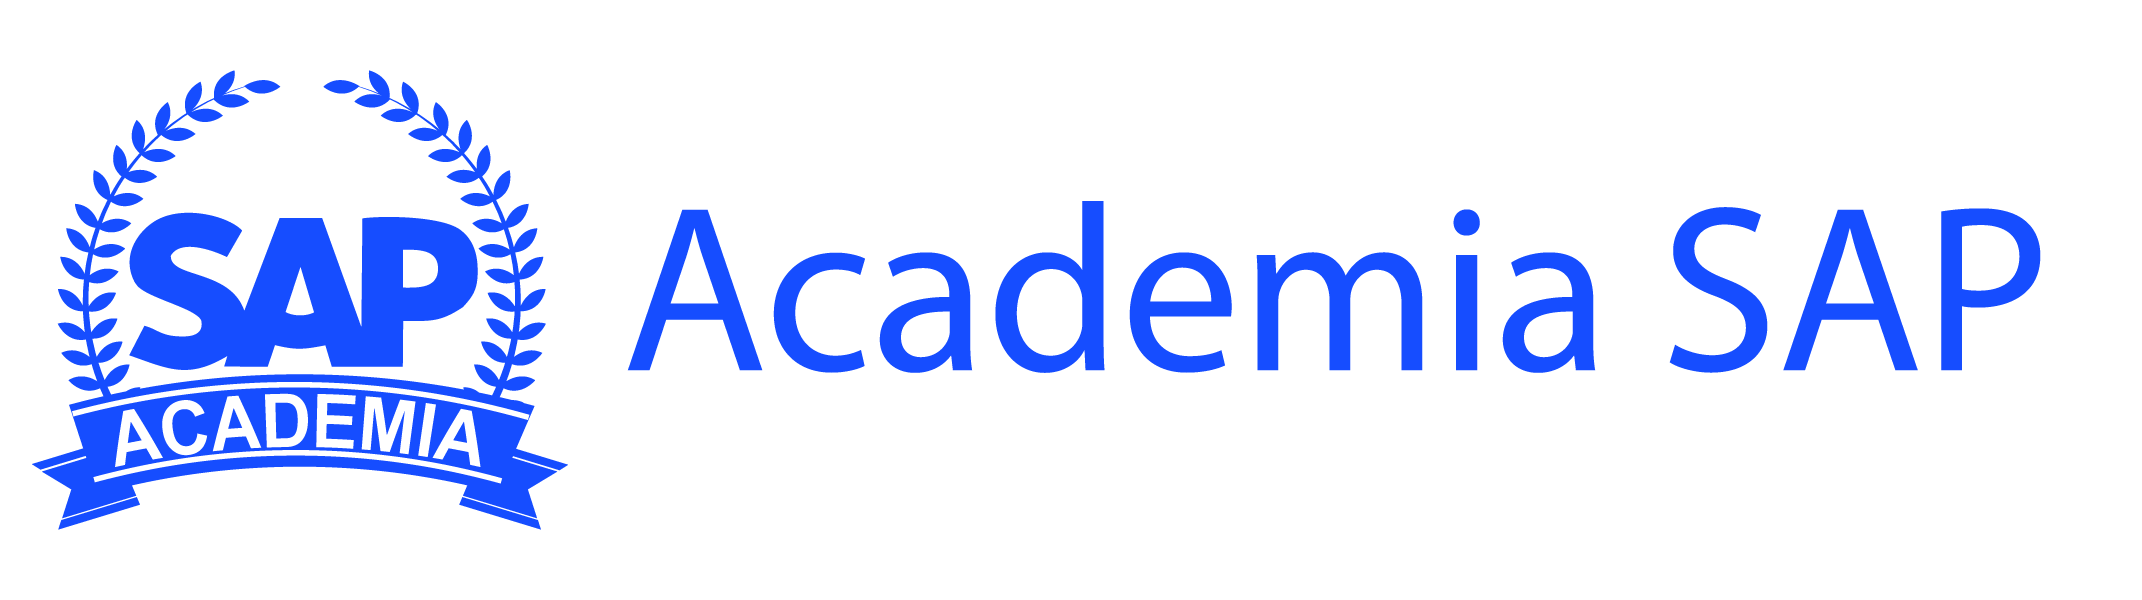 Academia SAP